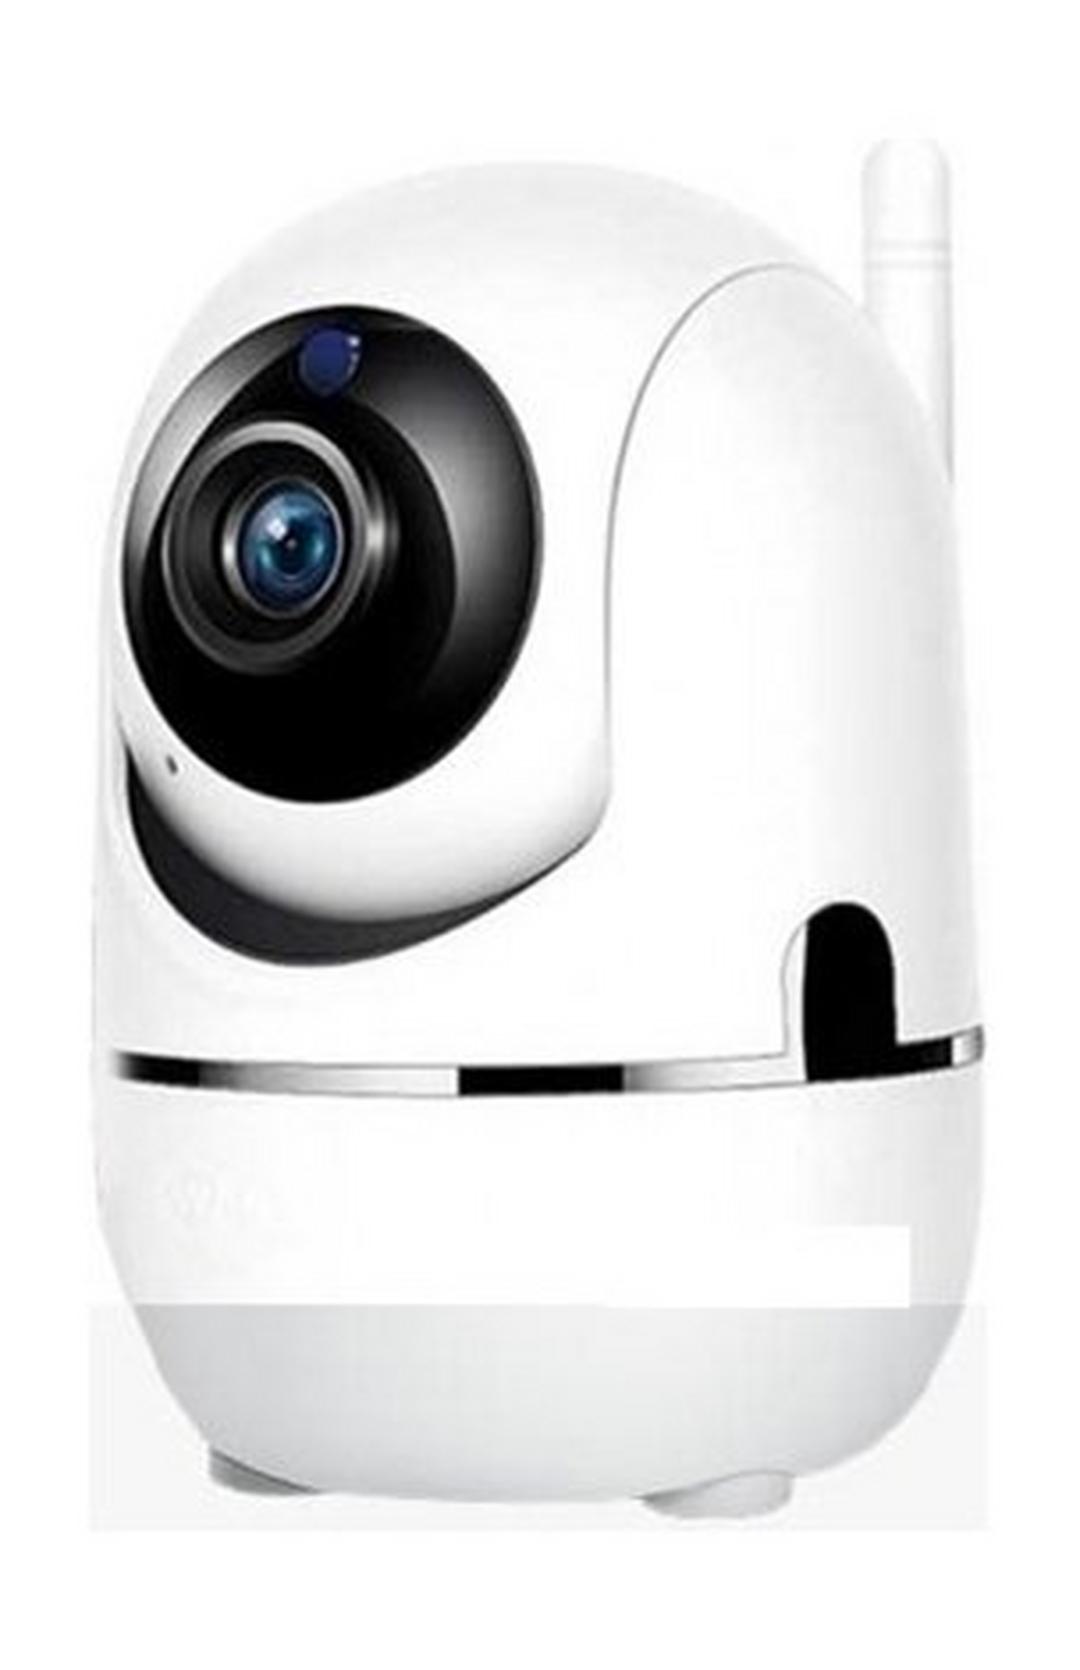 NHE Q7S 2MP Intelligent Tracking Camera - White